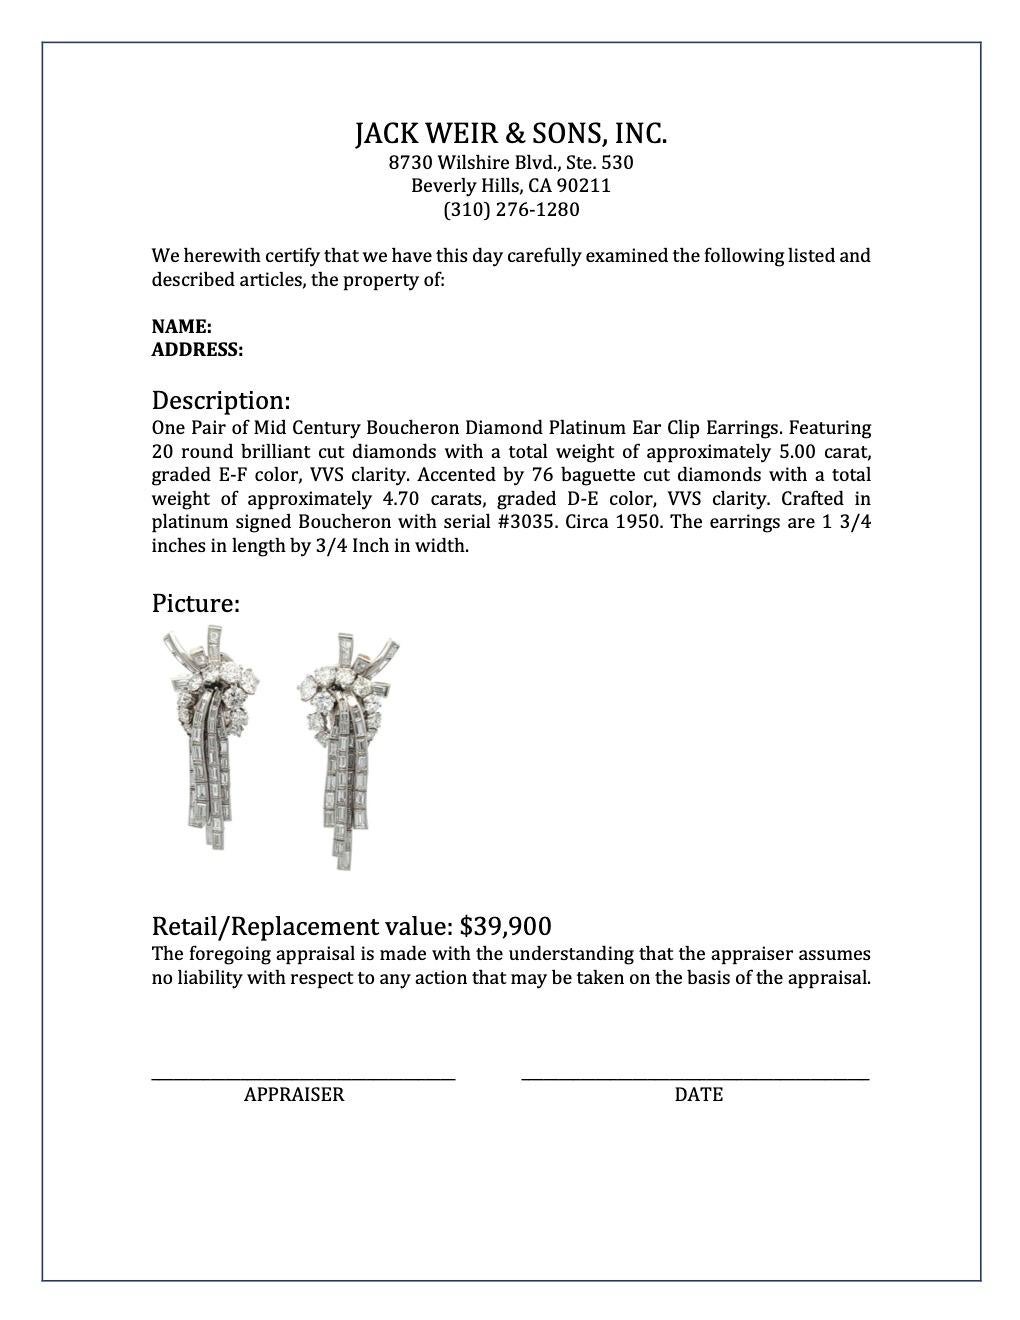 Mid Century Boucheron Diamond Platinum Ear Clip Earrings 1